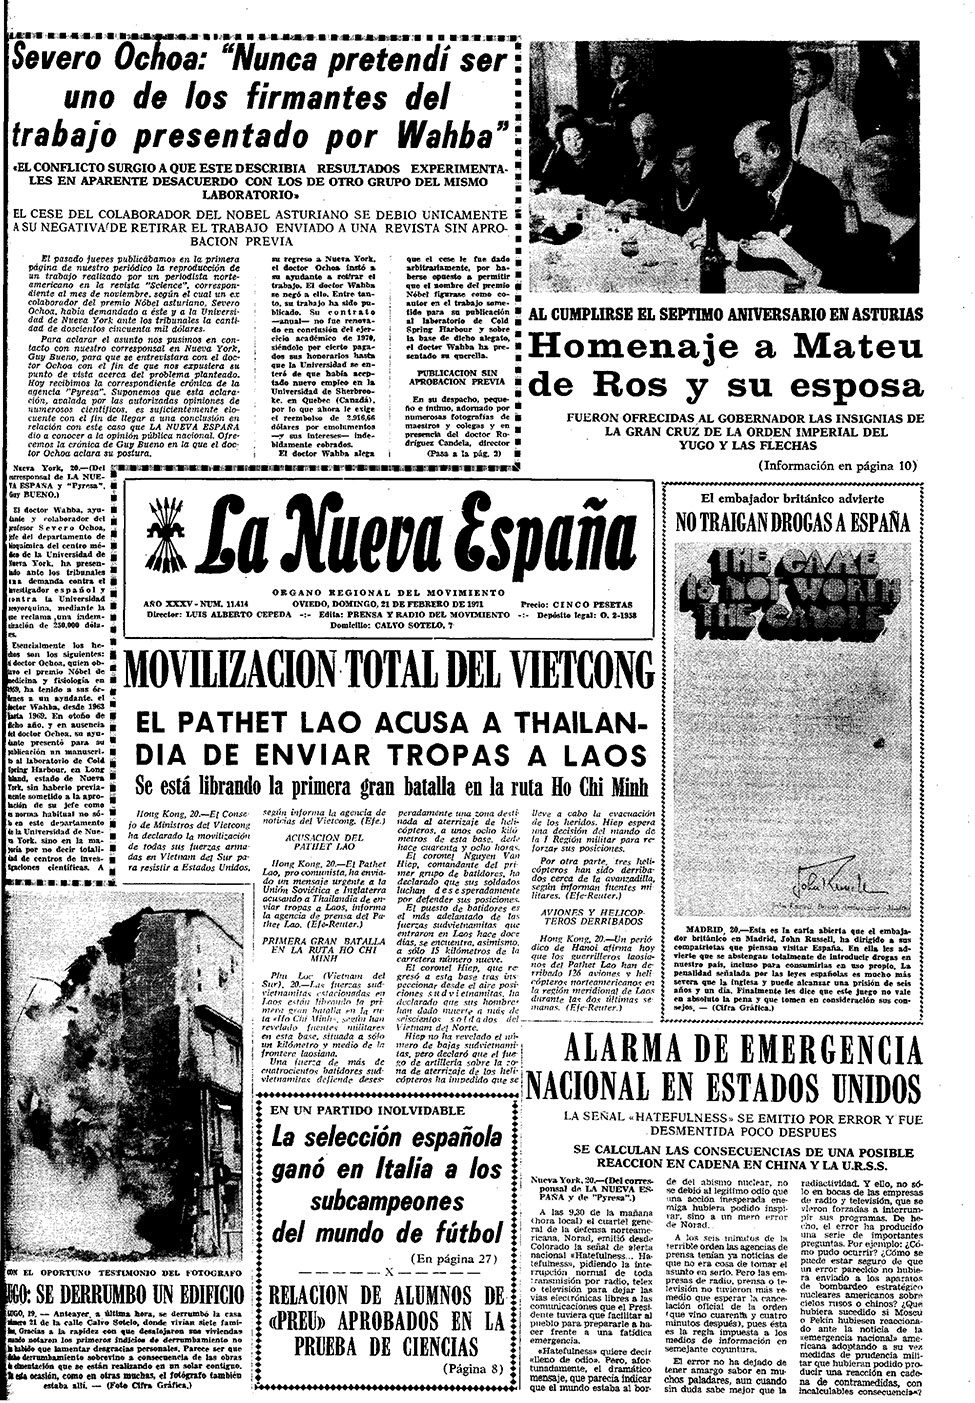 Portada del Domingo, 21 de Febrero de 1971